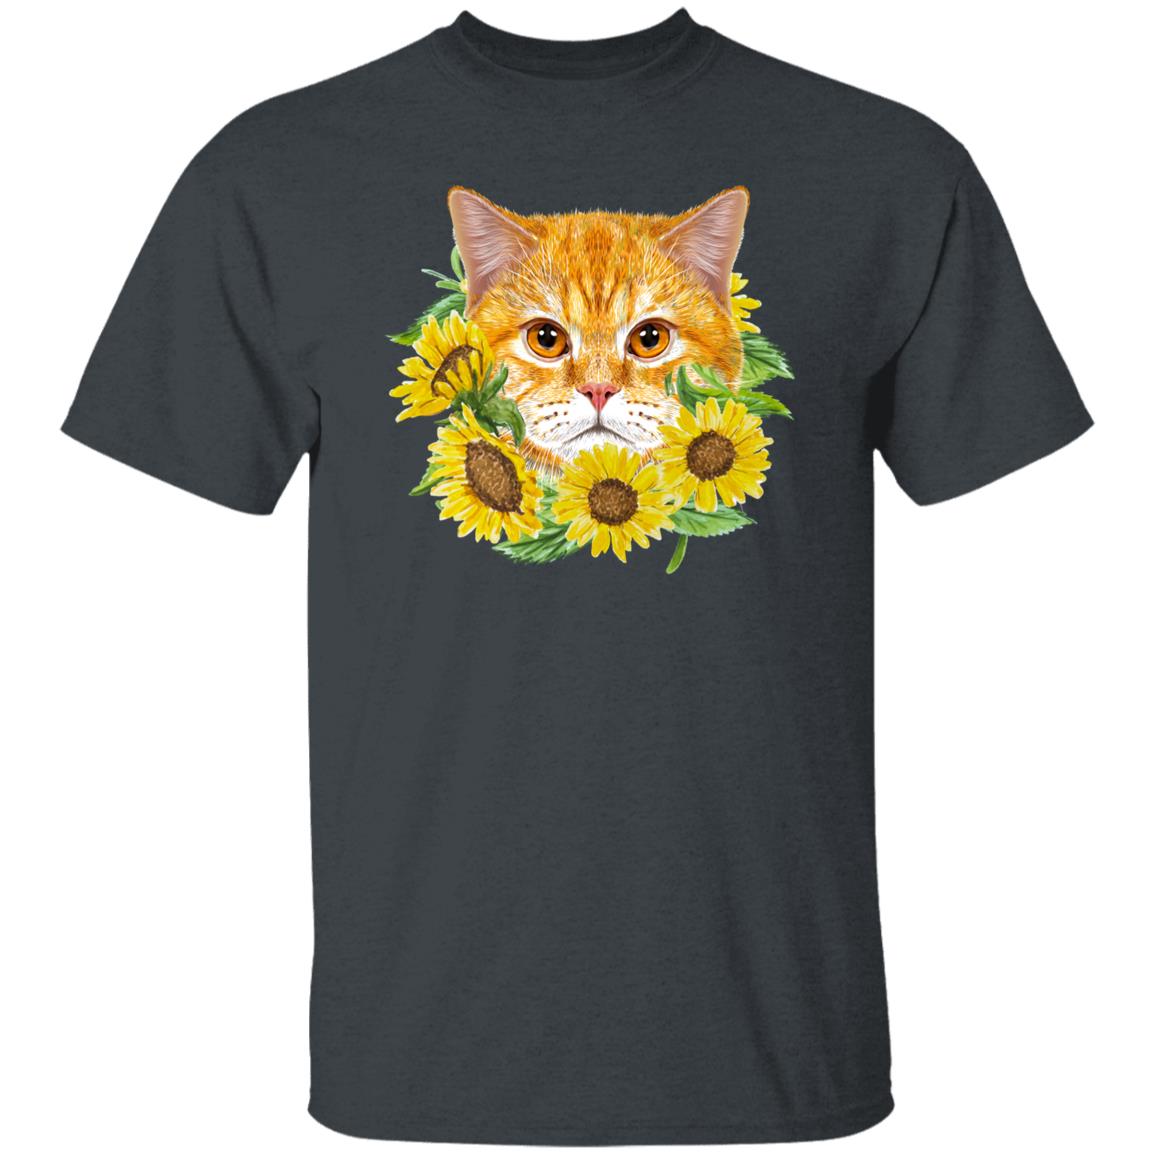 Cat with flowers Unisex shirt cat sunflowers tee Black Dark Heather-Family-Gift-Planet